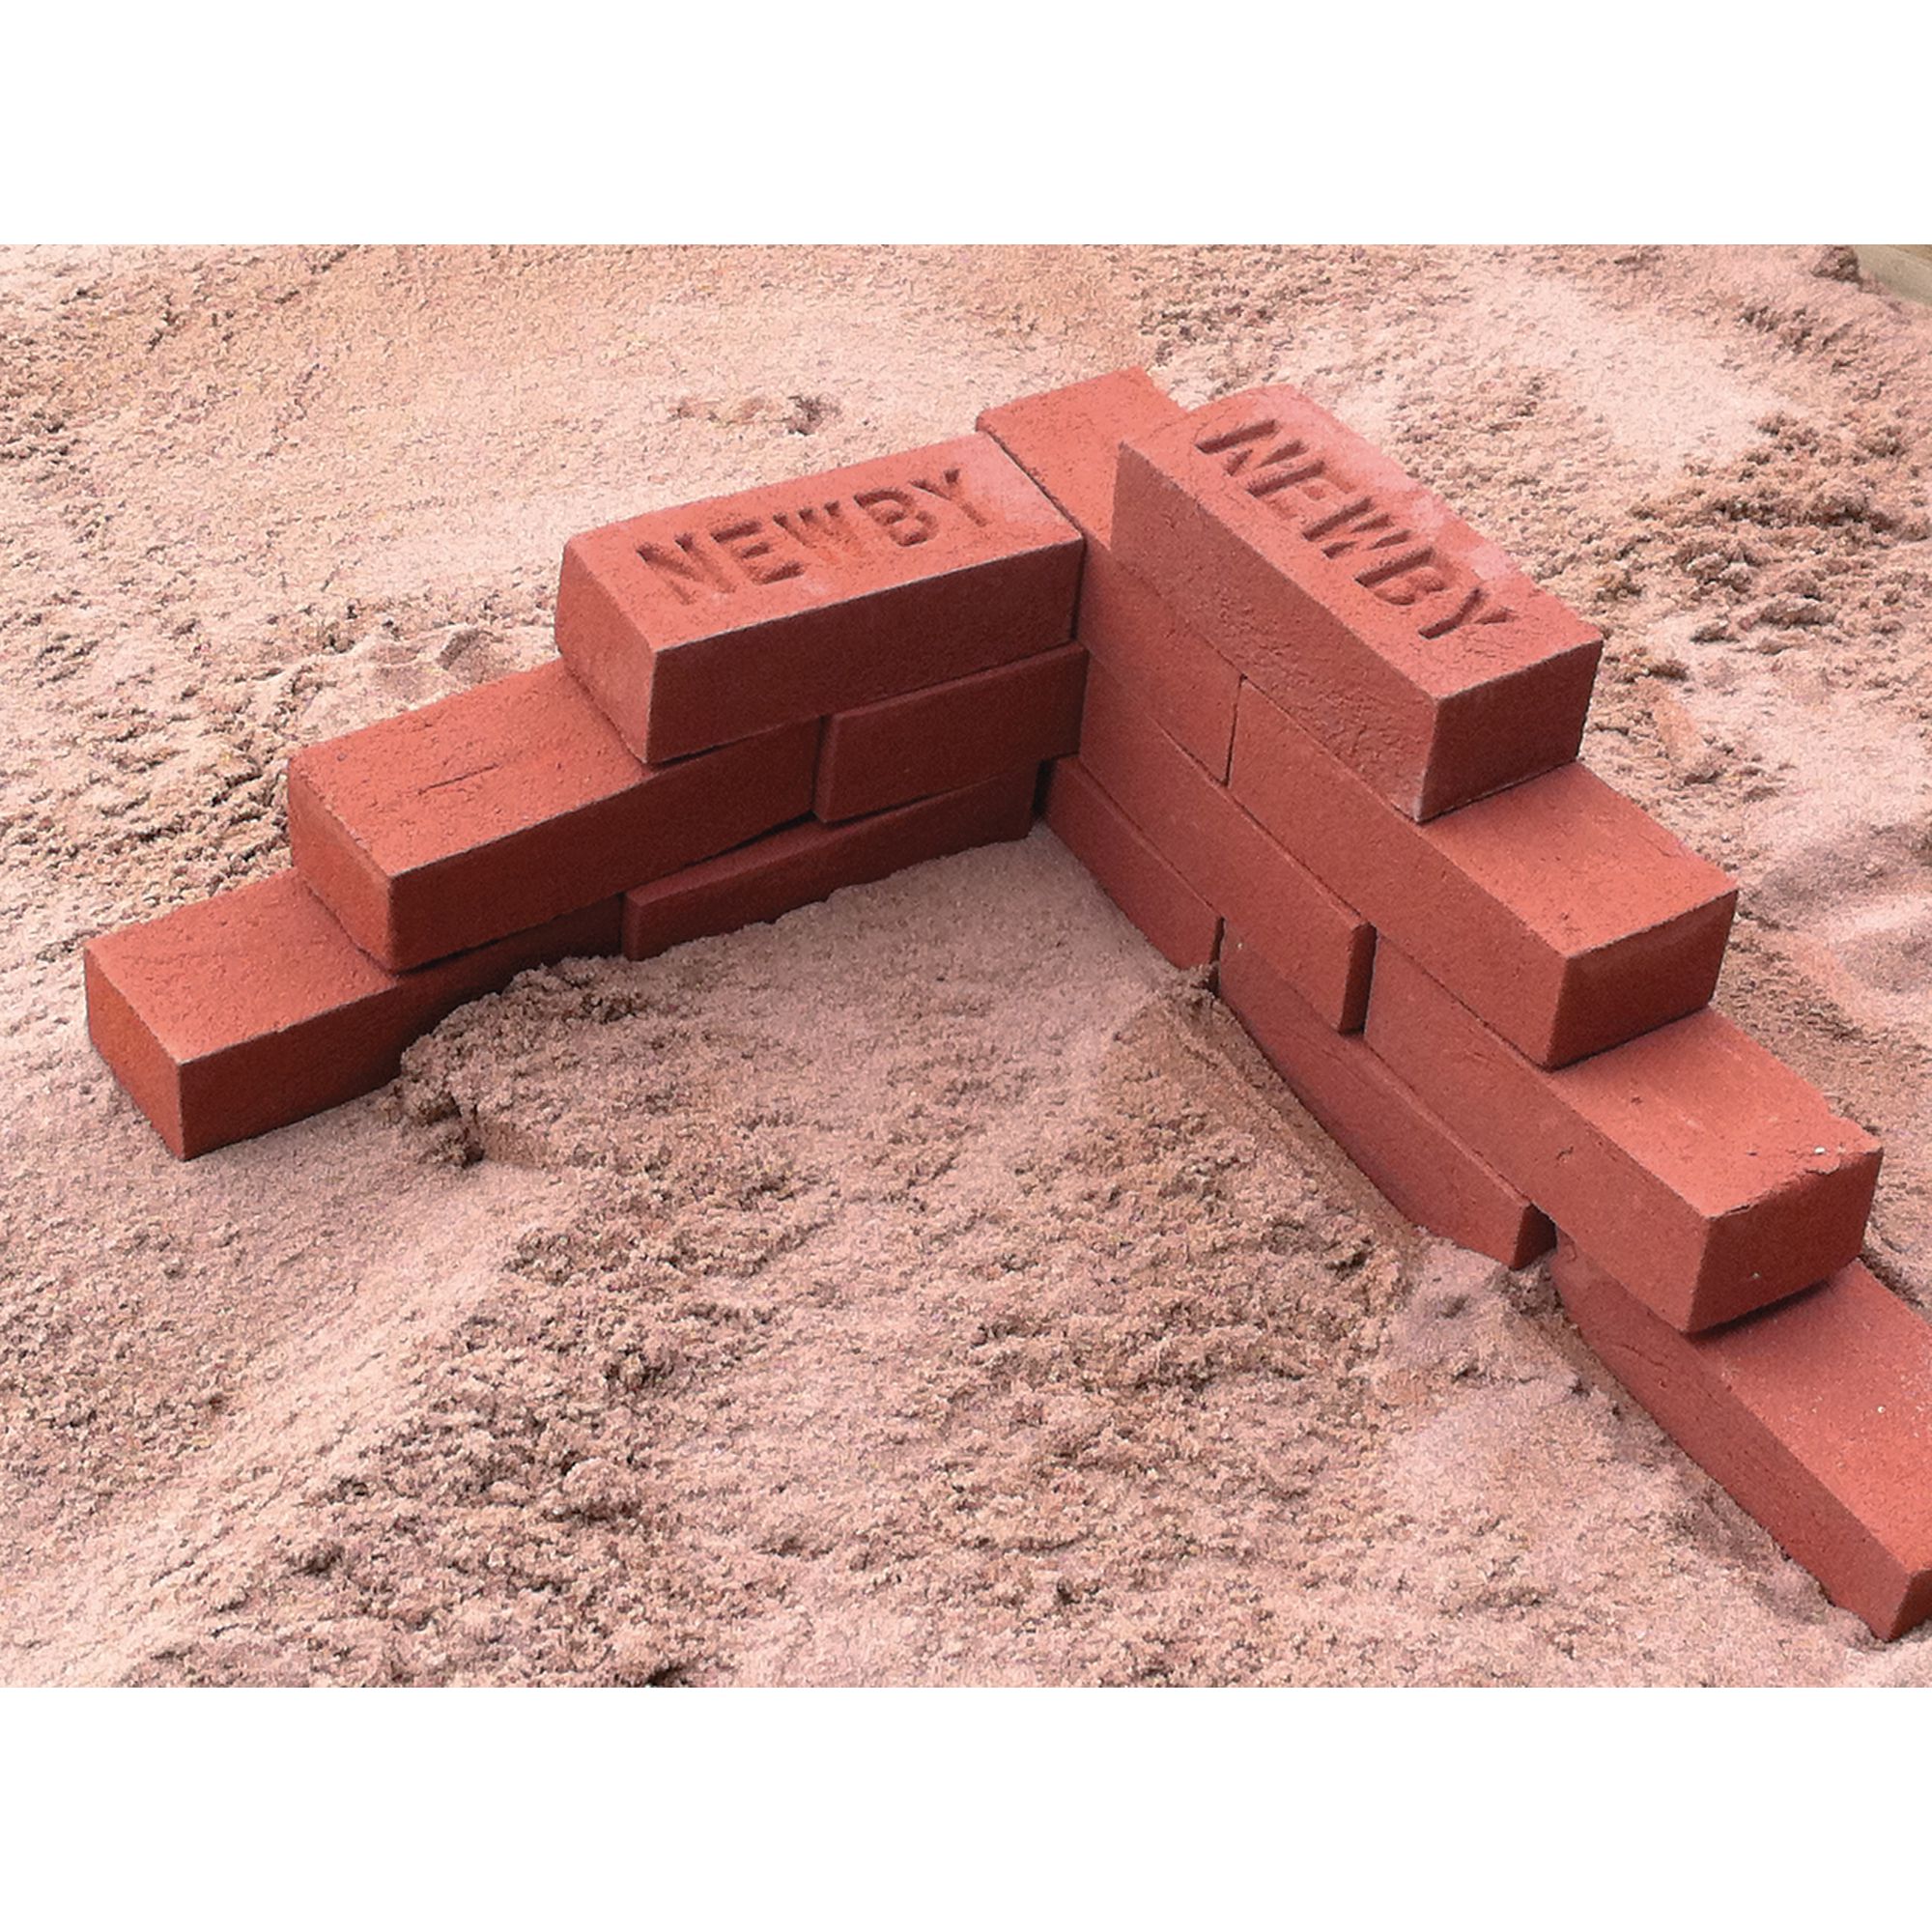 HC1496276 - NEWBY LEISURE Real Mini Bricks